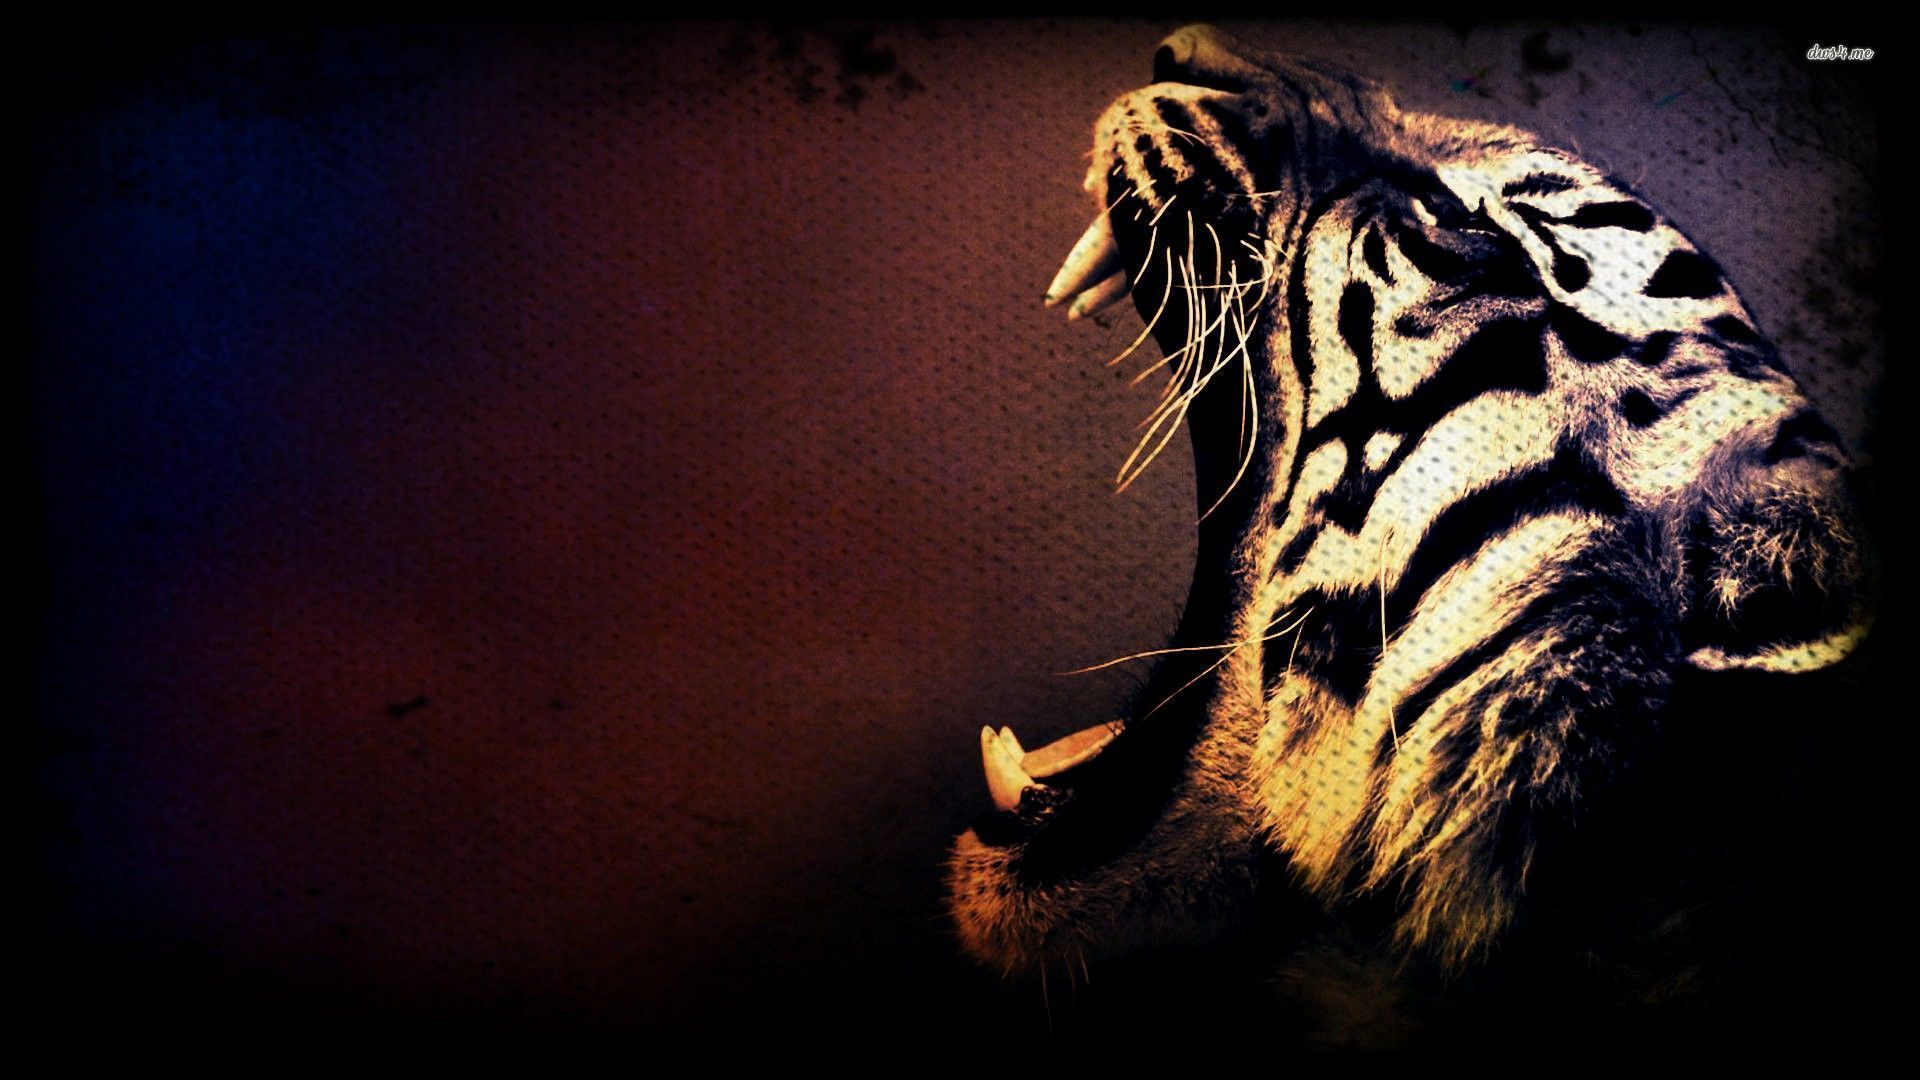 Roaring tiger wallpaper - Digital Art wallpapers -